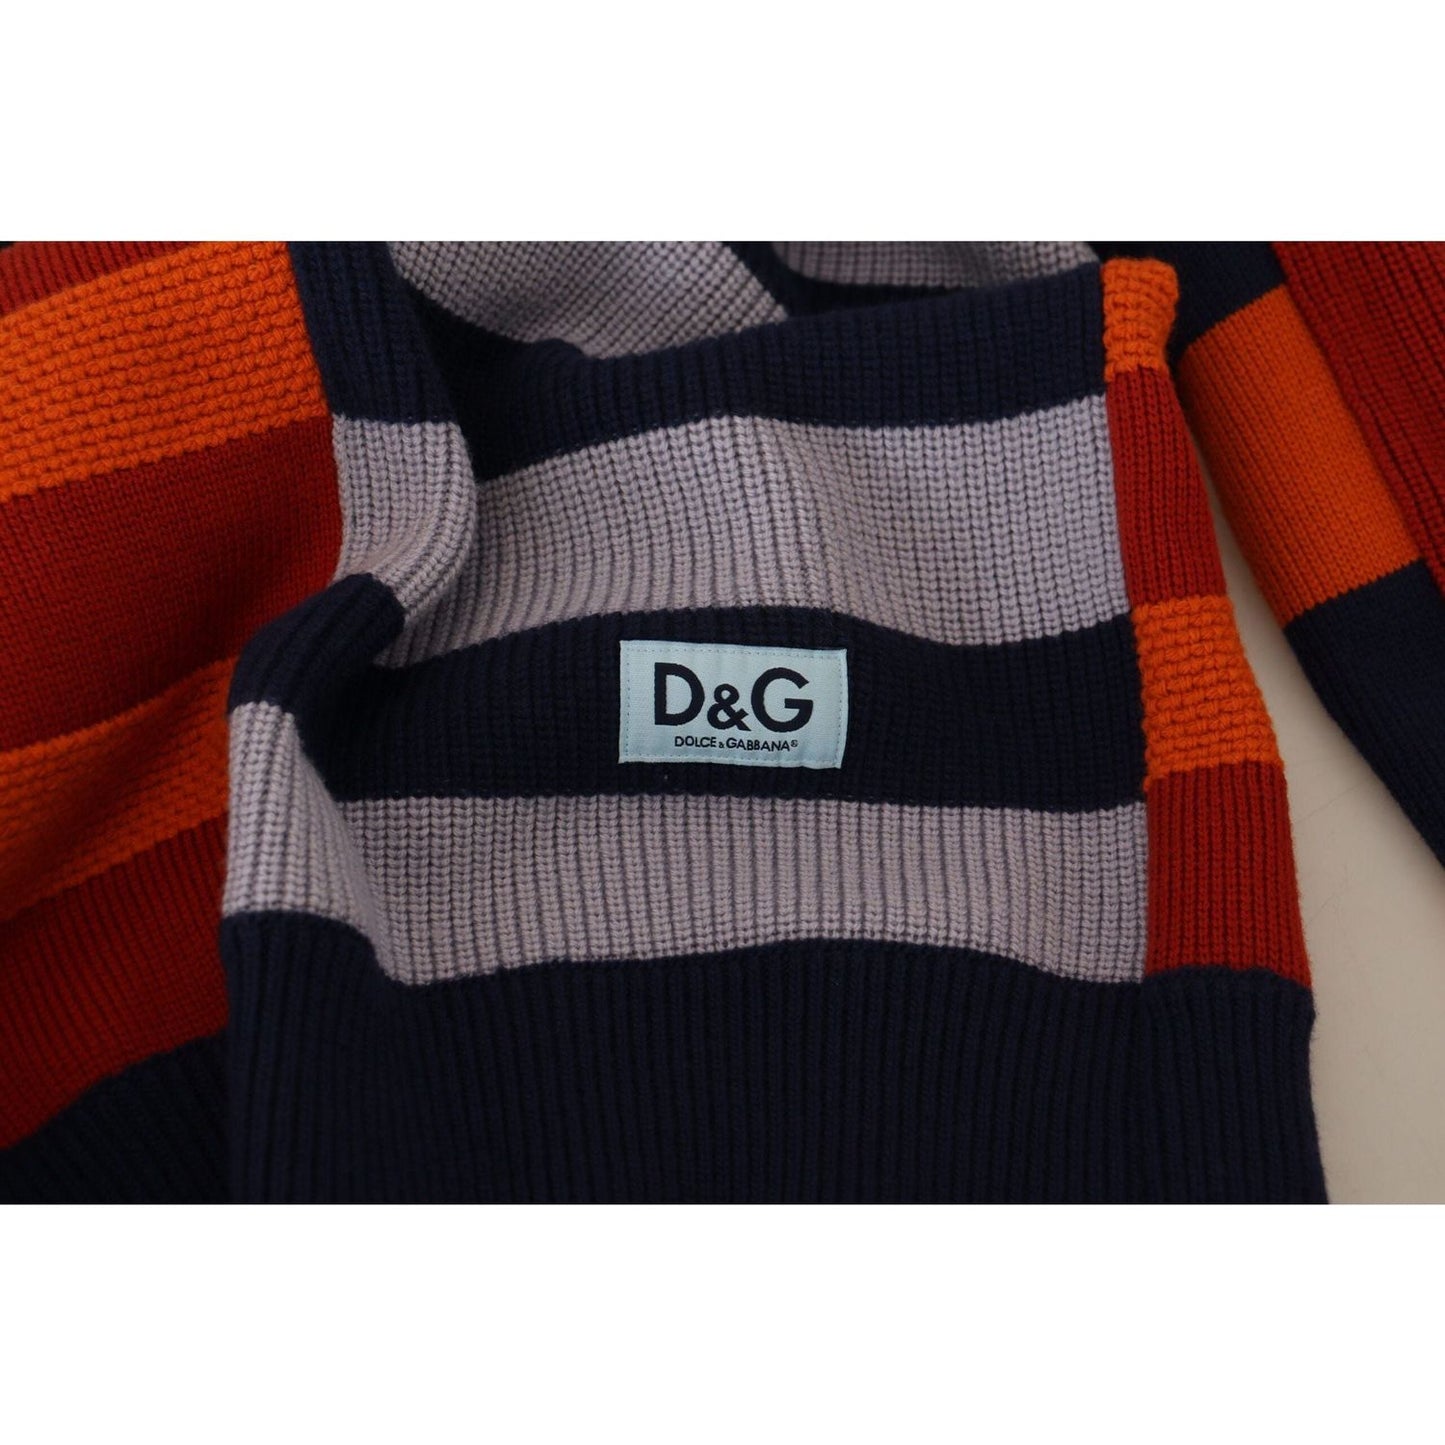 Dolce & GabbanaPullover Sweater in Multicolor StripesMcRichard Designer Brands£829.00